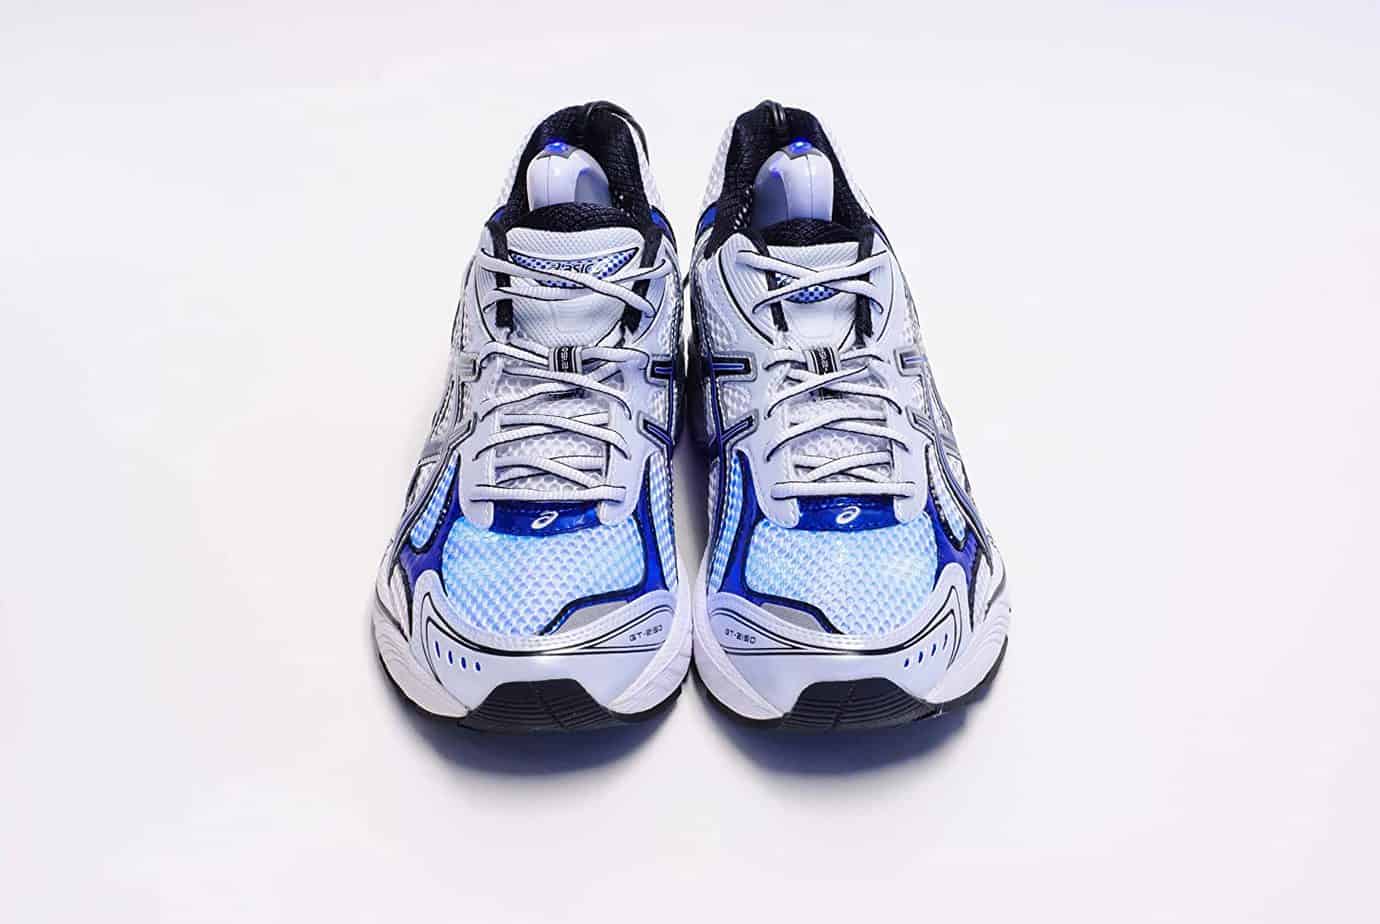 SteriShoe Ultraviolet Shoe Sanitizer Running Shoes